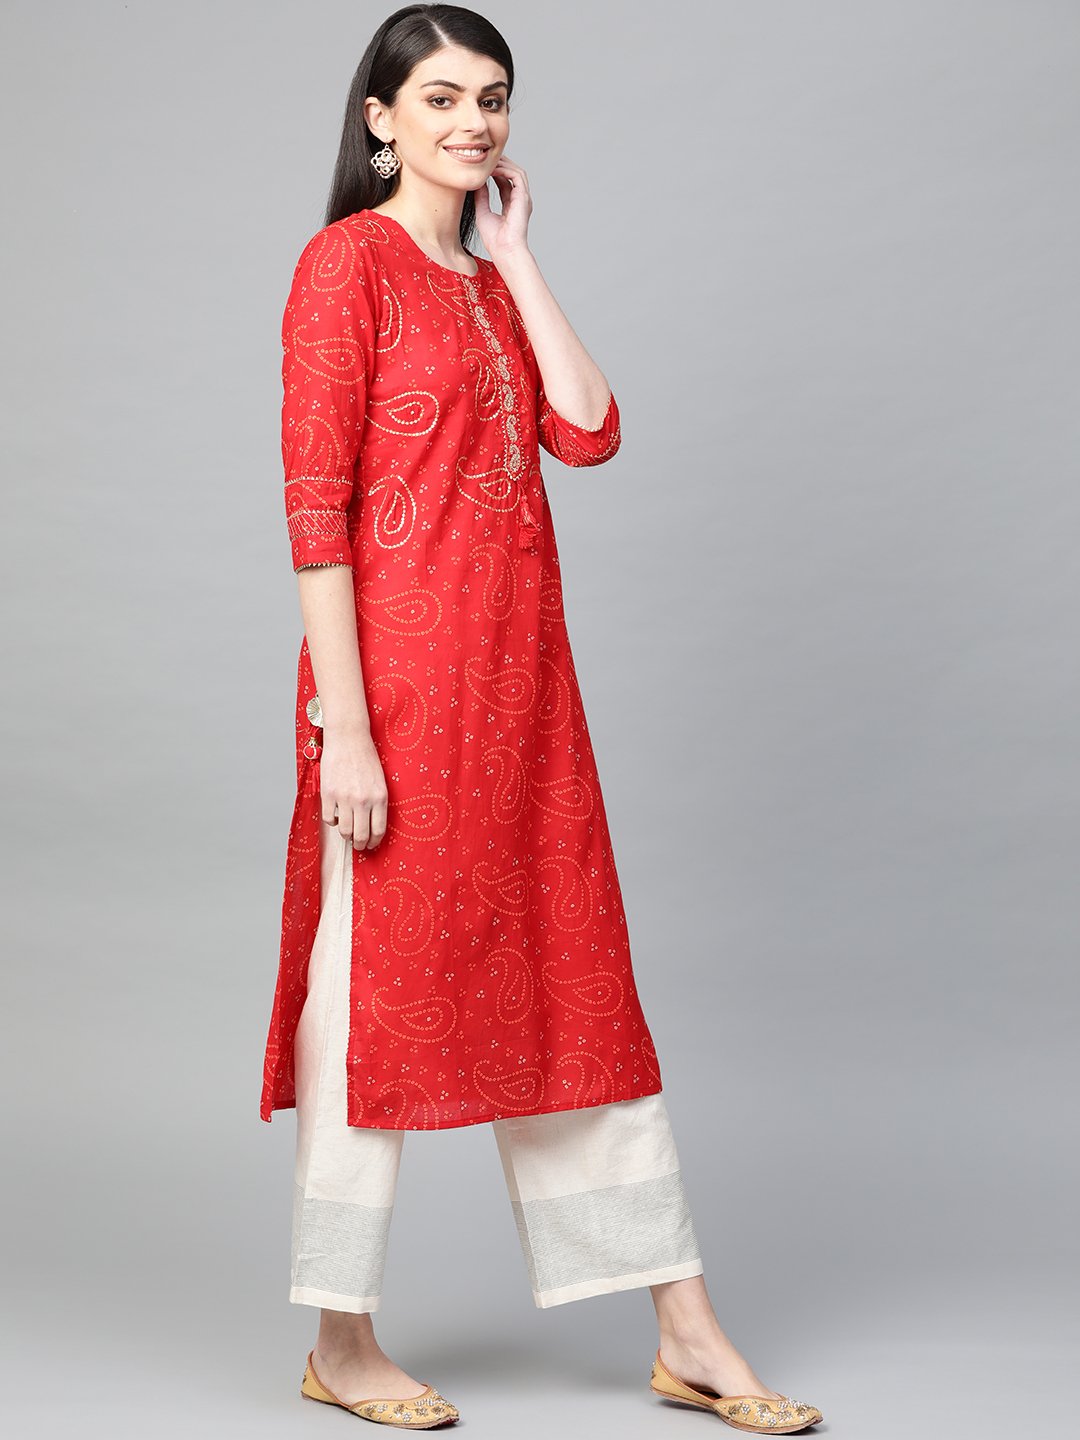 Ishin Women's Cotton Red Embellished A-Line Kurta